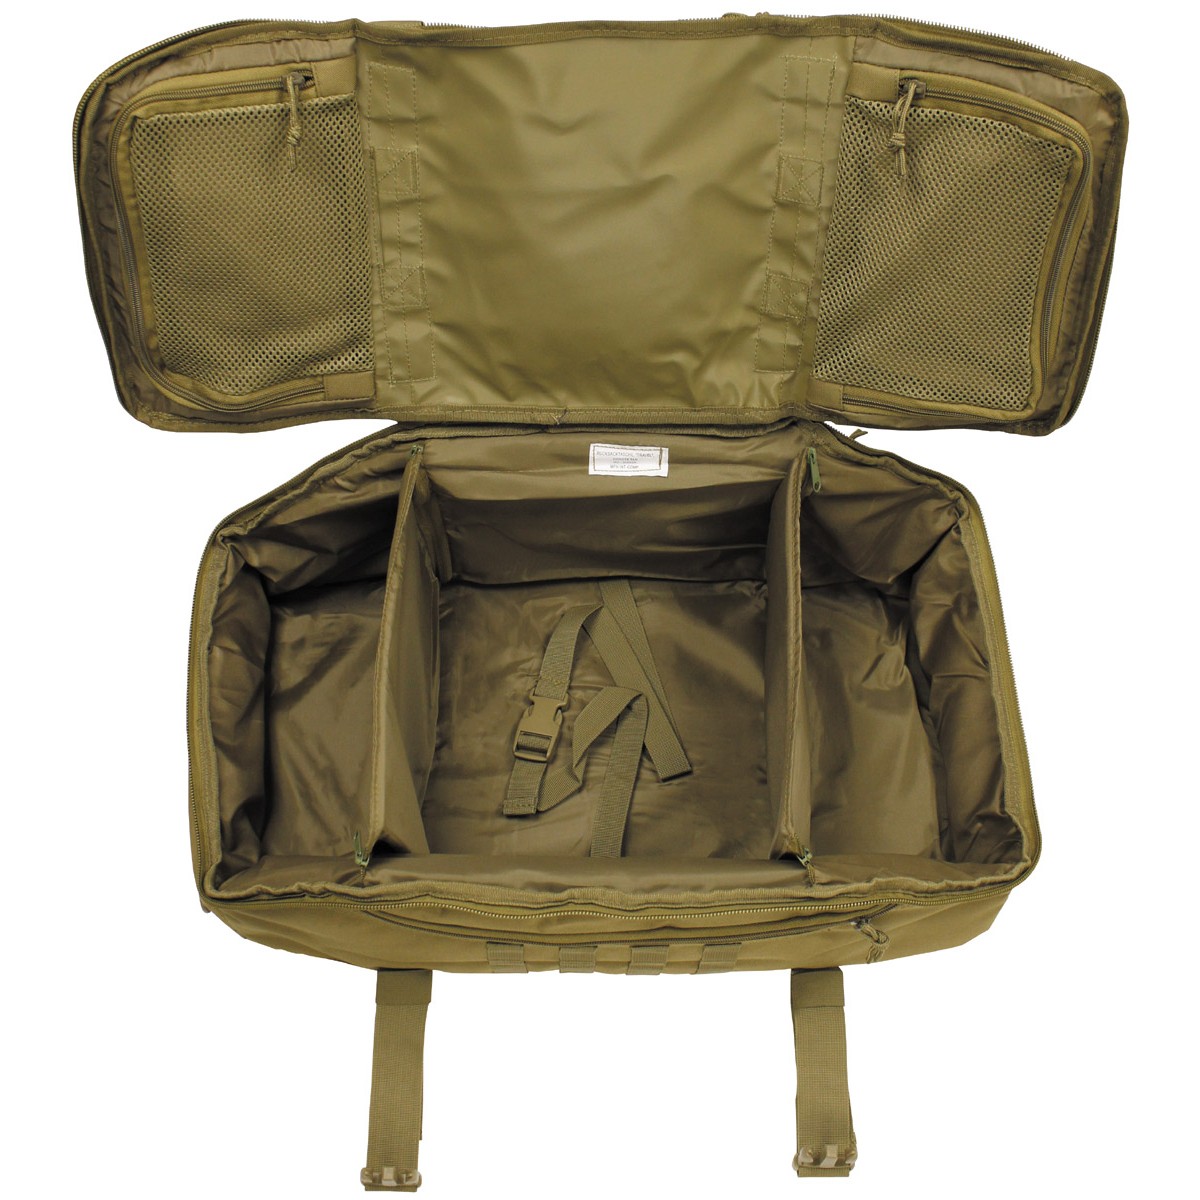 MFH® Tactical Shooters Range Transport Travel Bag 48L - Coyote